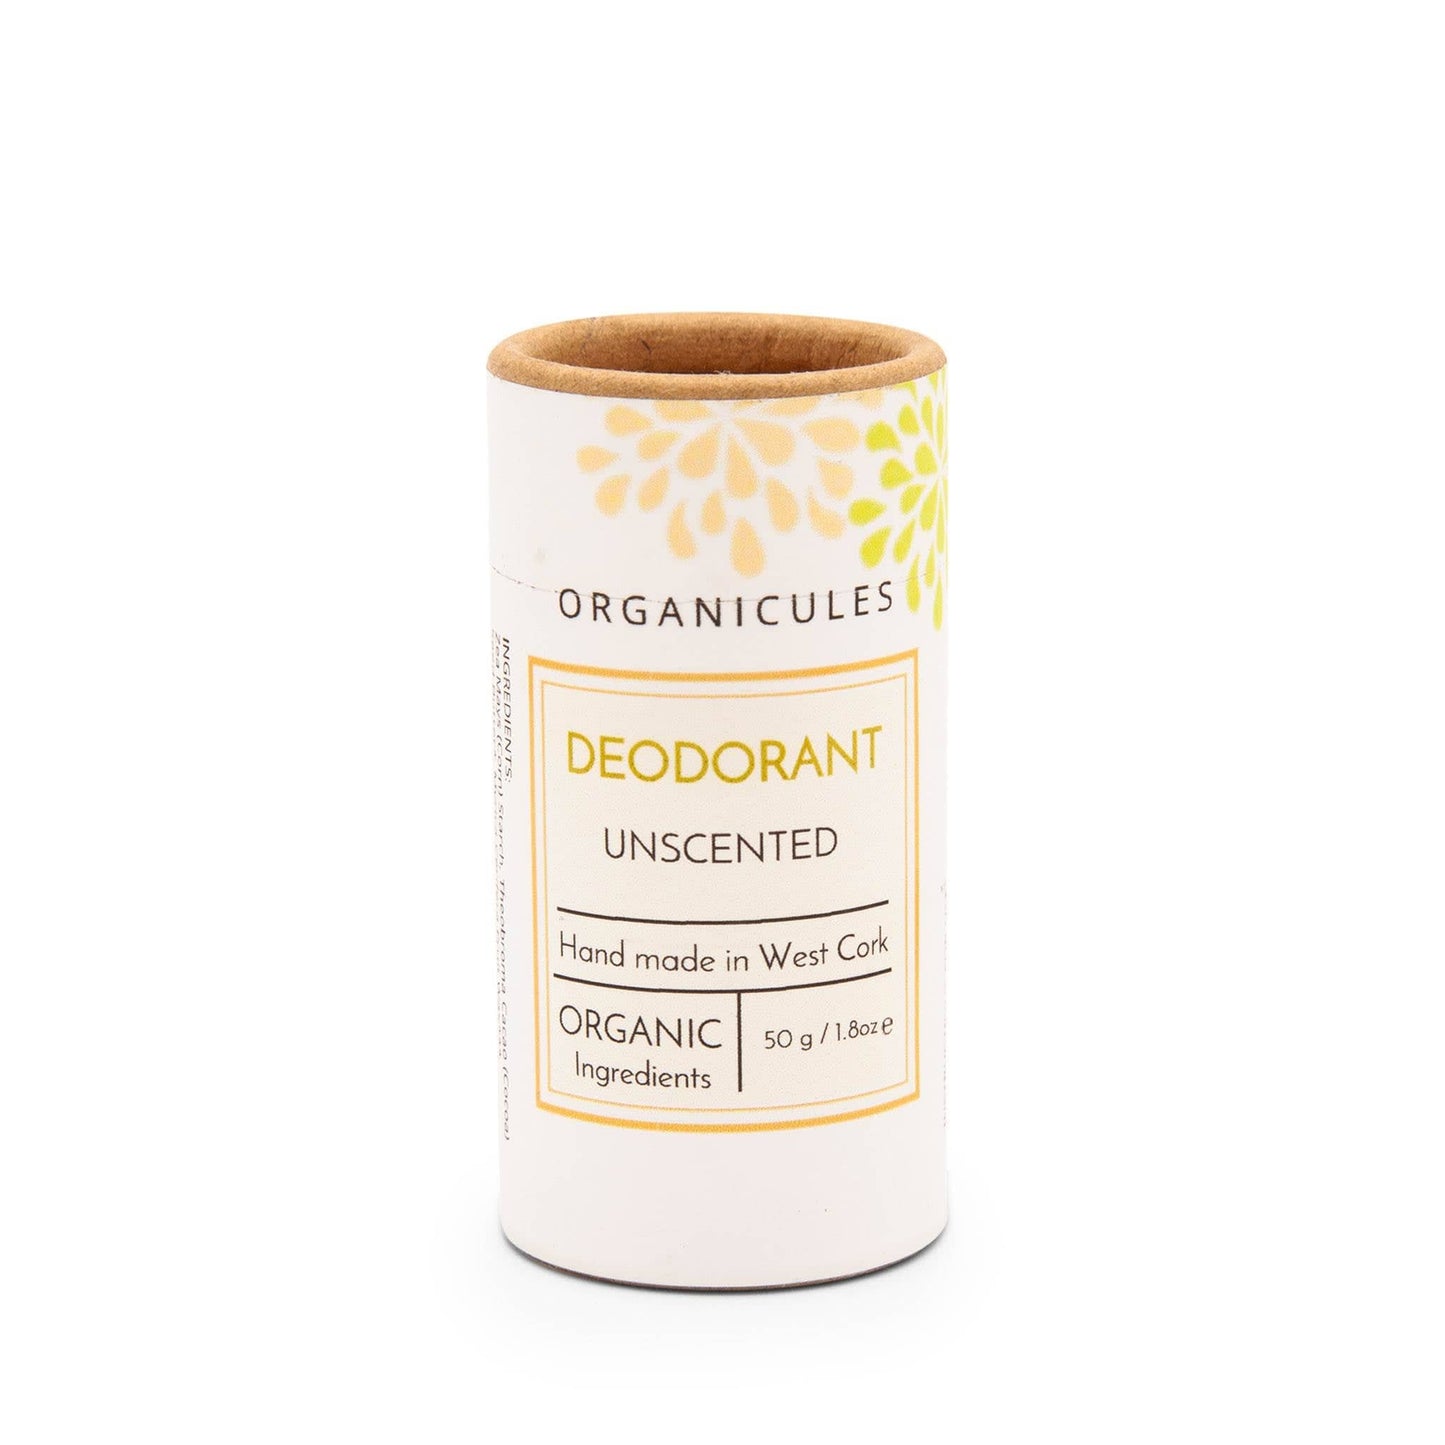 Organicules Deodorant Organicules Natural Deodorant - Unscented